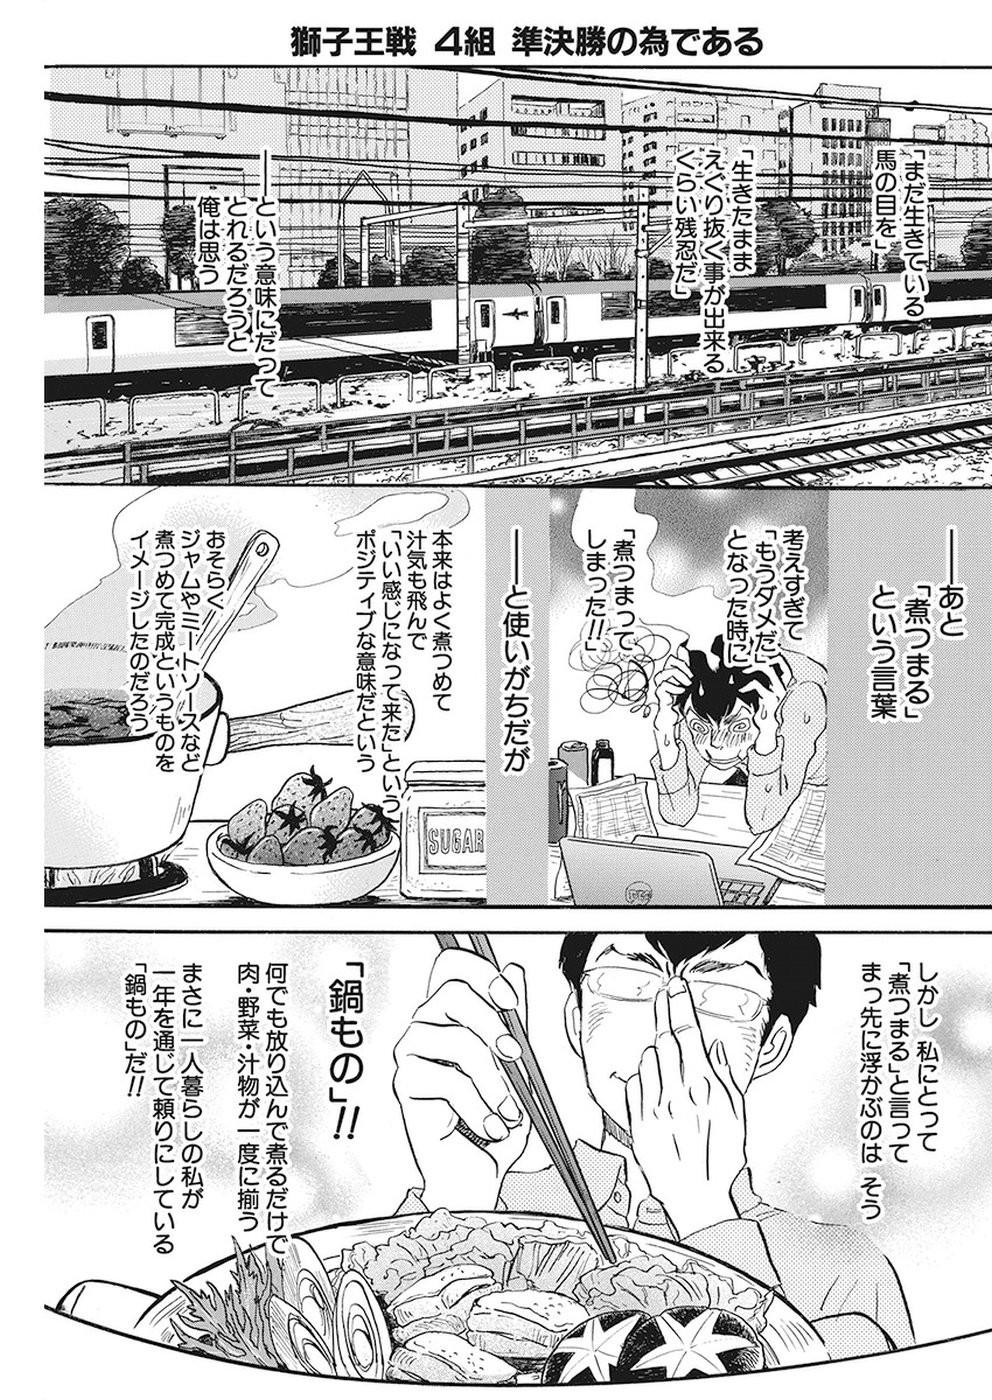 3 Gatsu no Lion - Chapter 156 - Page 3